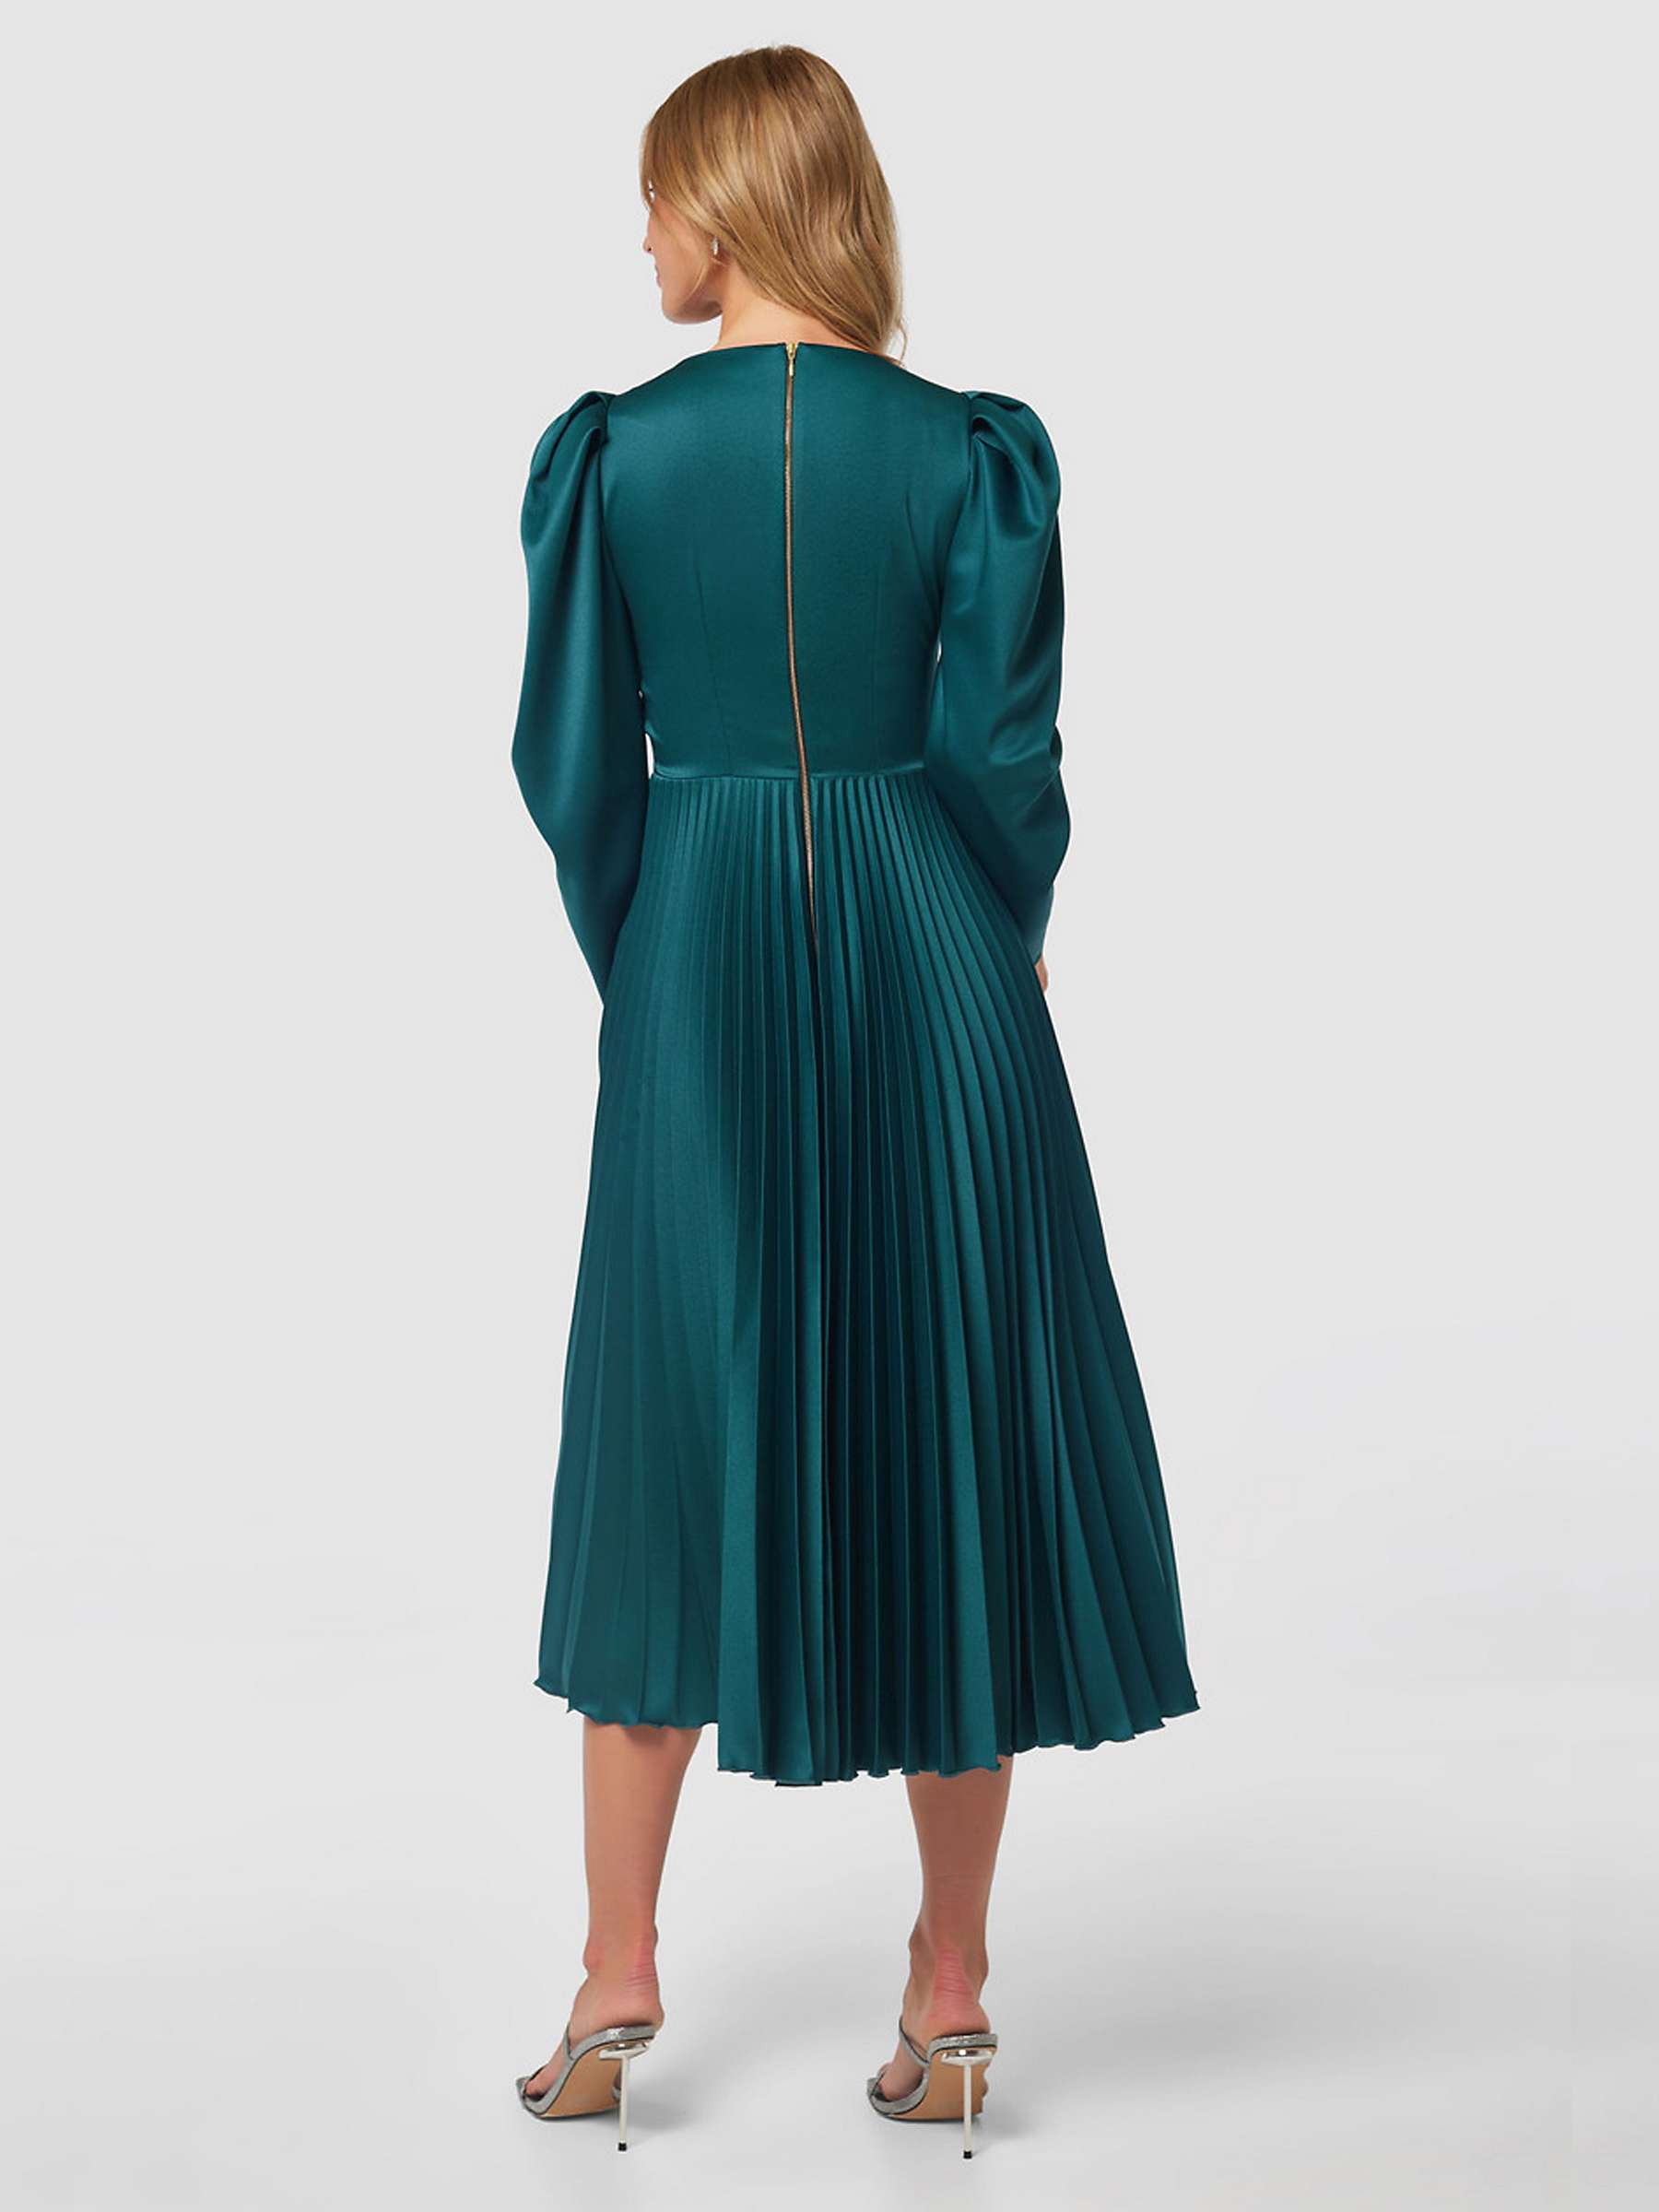 Closet London Pleated Dress, Teal at John Lewis & Partners